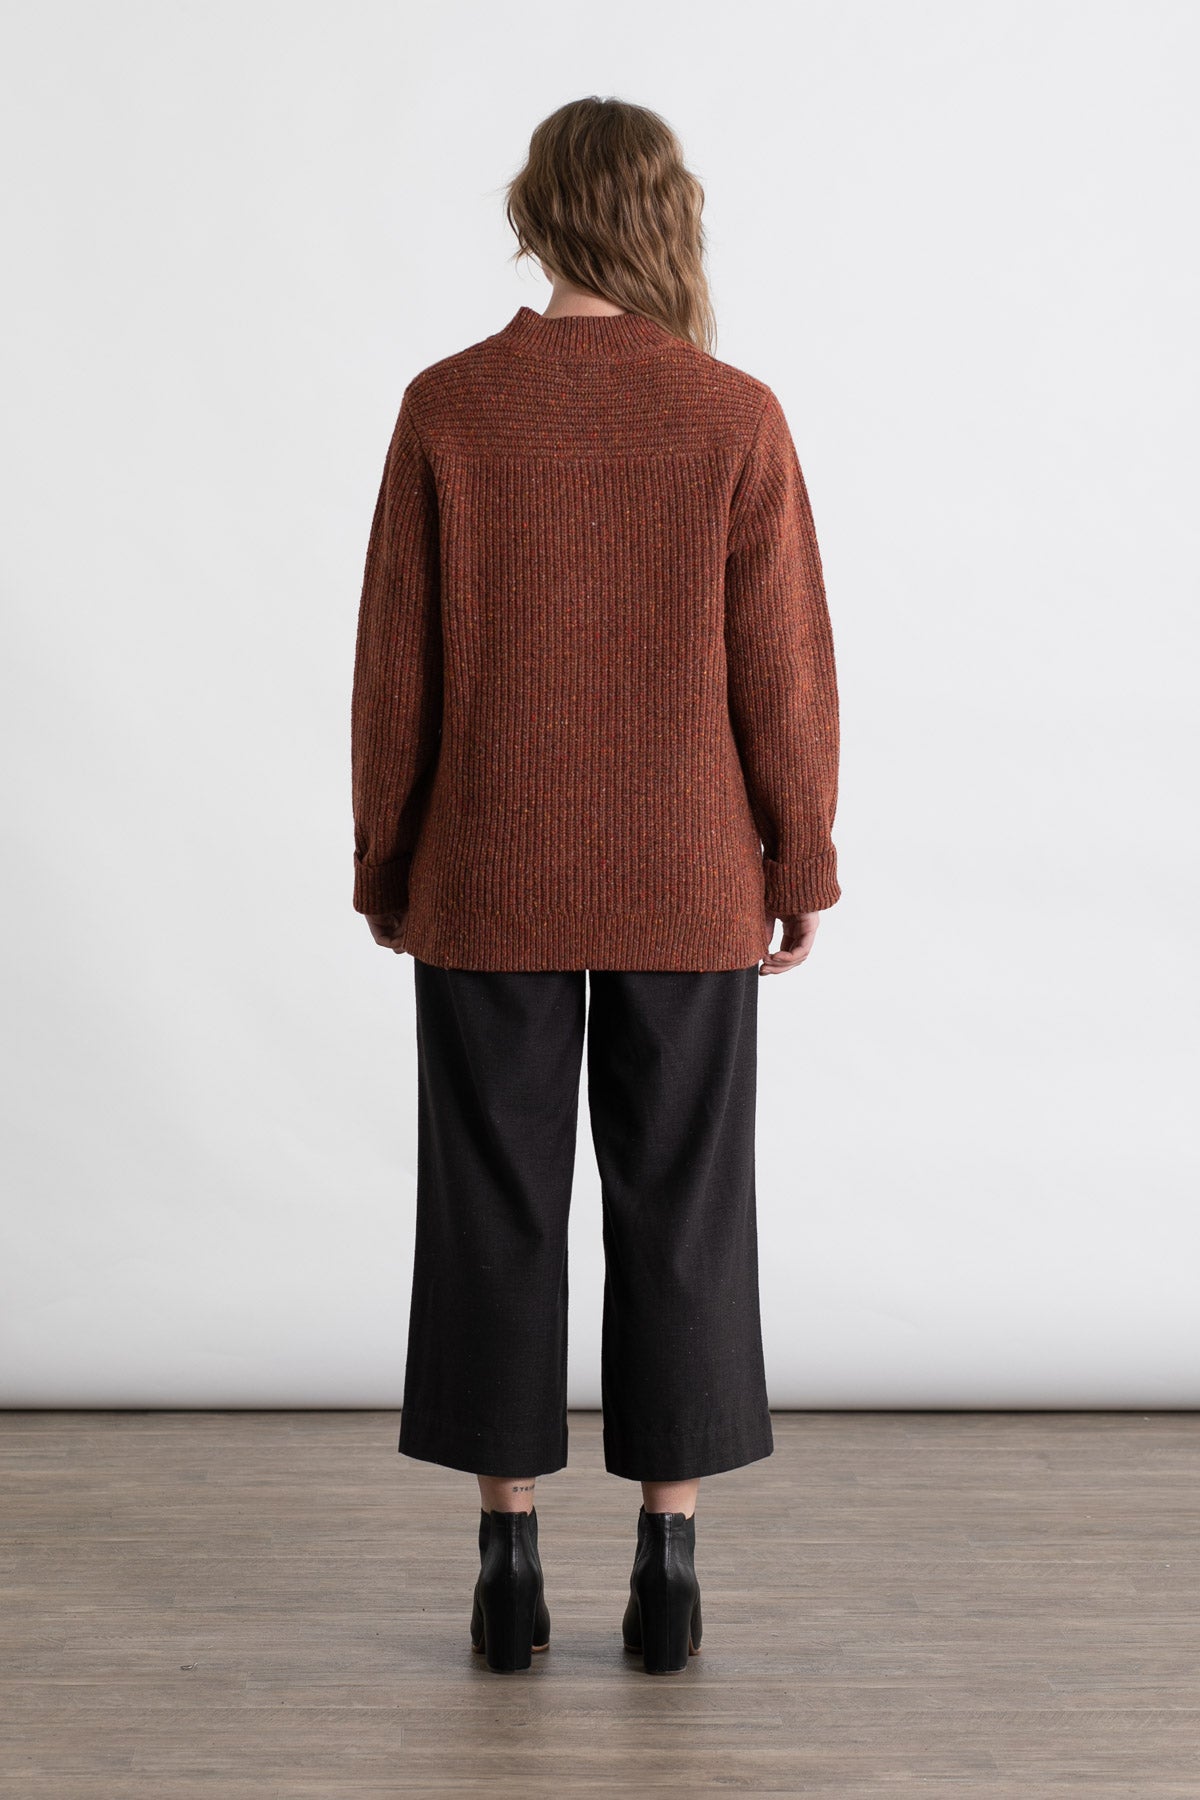 Chloe Mockneck Sweater / Camden